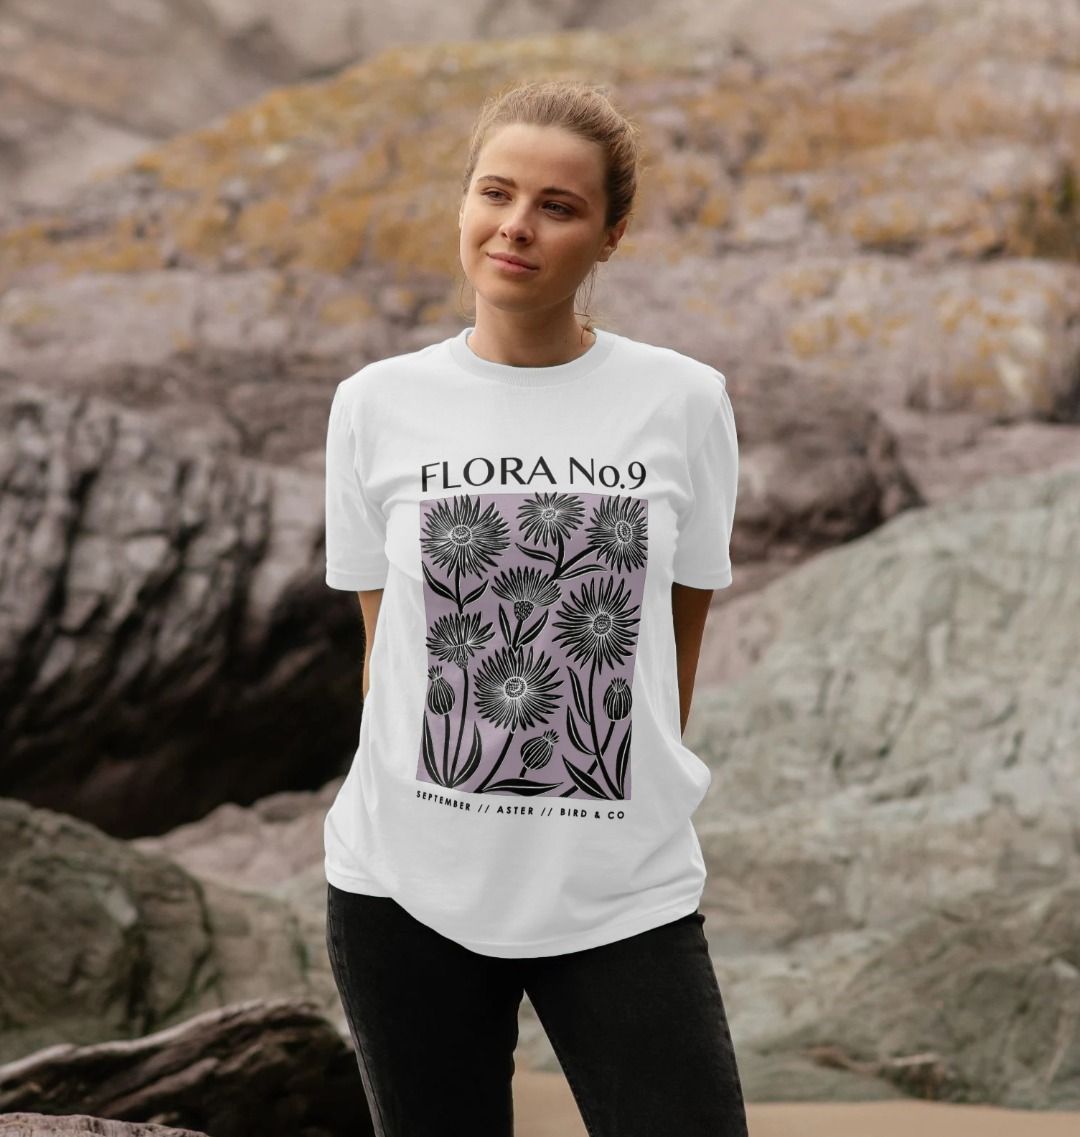 September Aster – Unisex Birth Flora Tshirt (Colour)